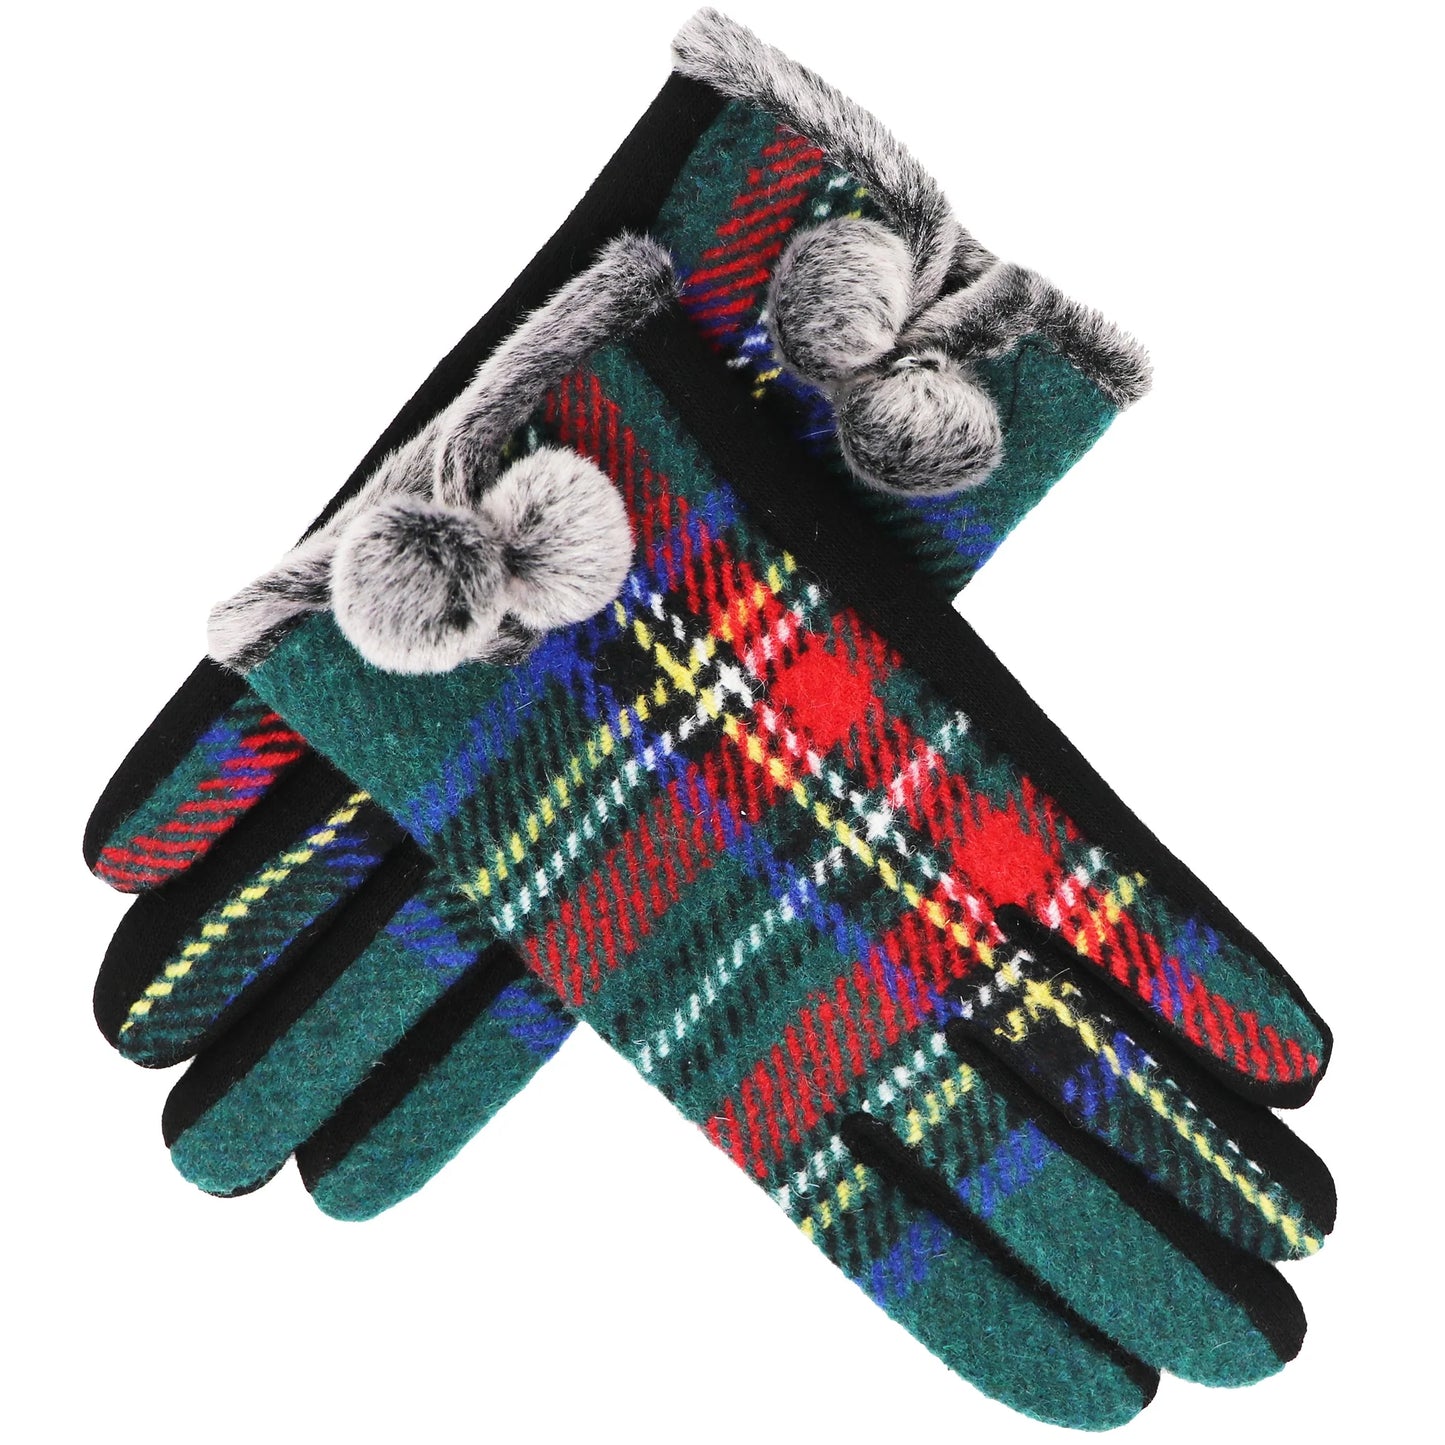 Children's Traditional Tartan Gloves